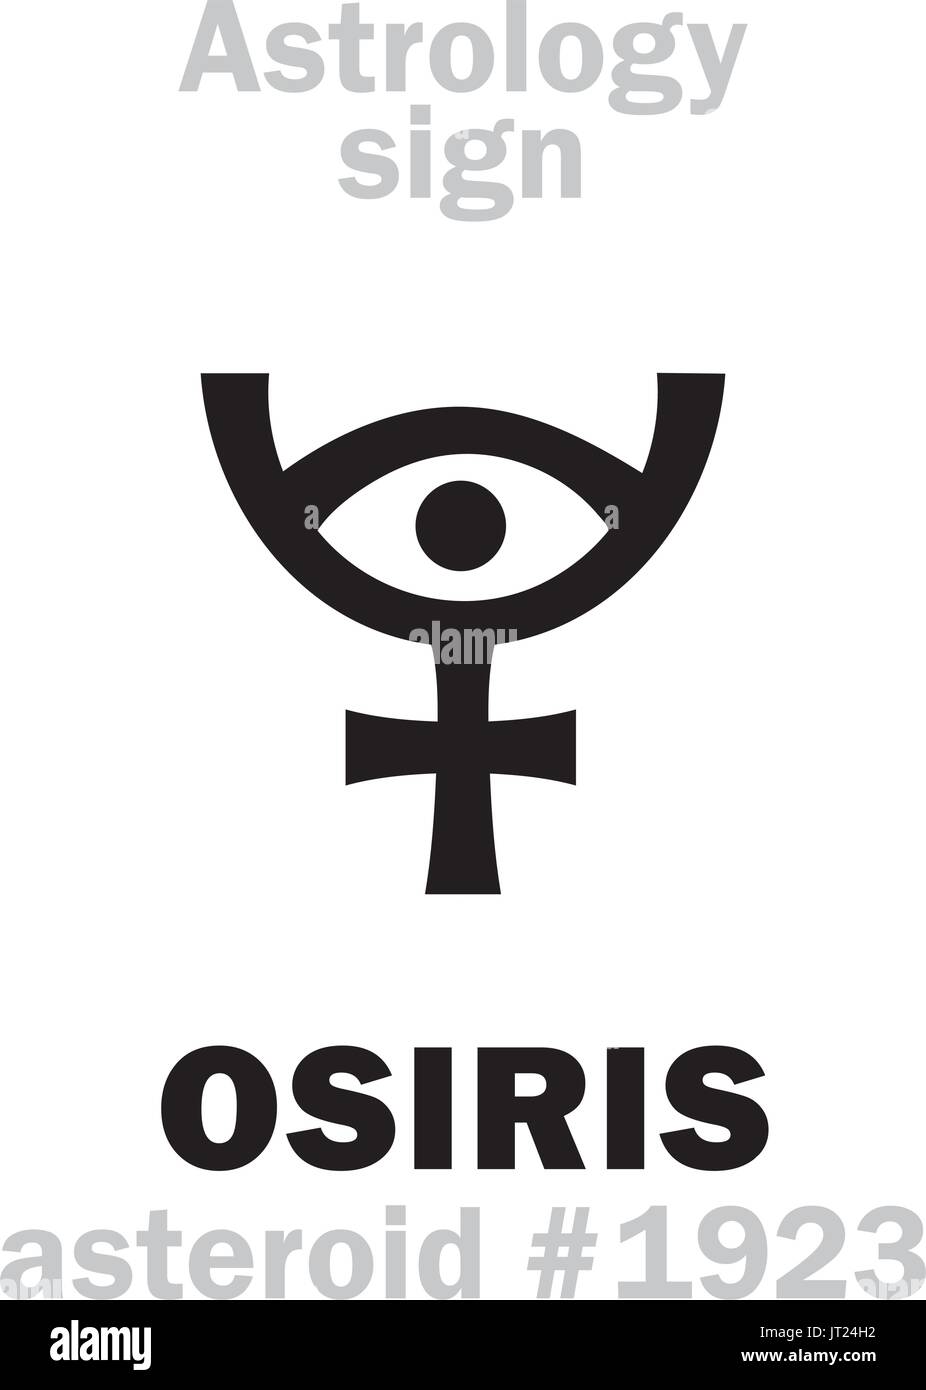 Astrology Alphabet: OSIRIS (Usir), asteroid #1923. Hieroglyphics character sign (single symbol). Stock Vector